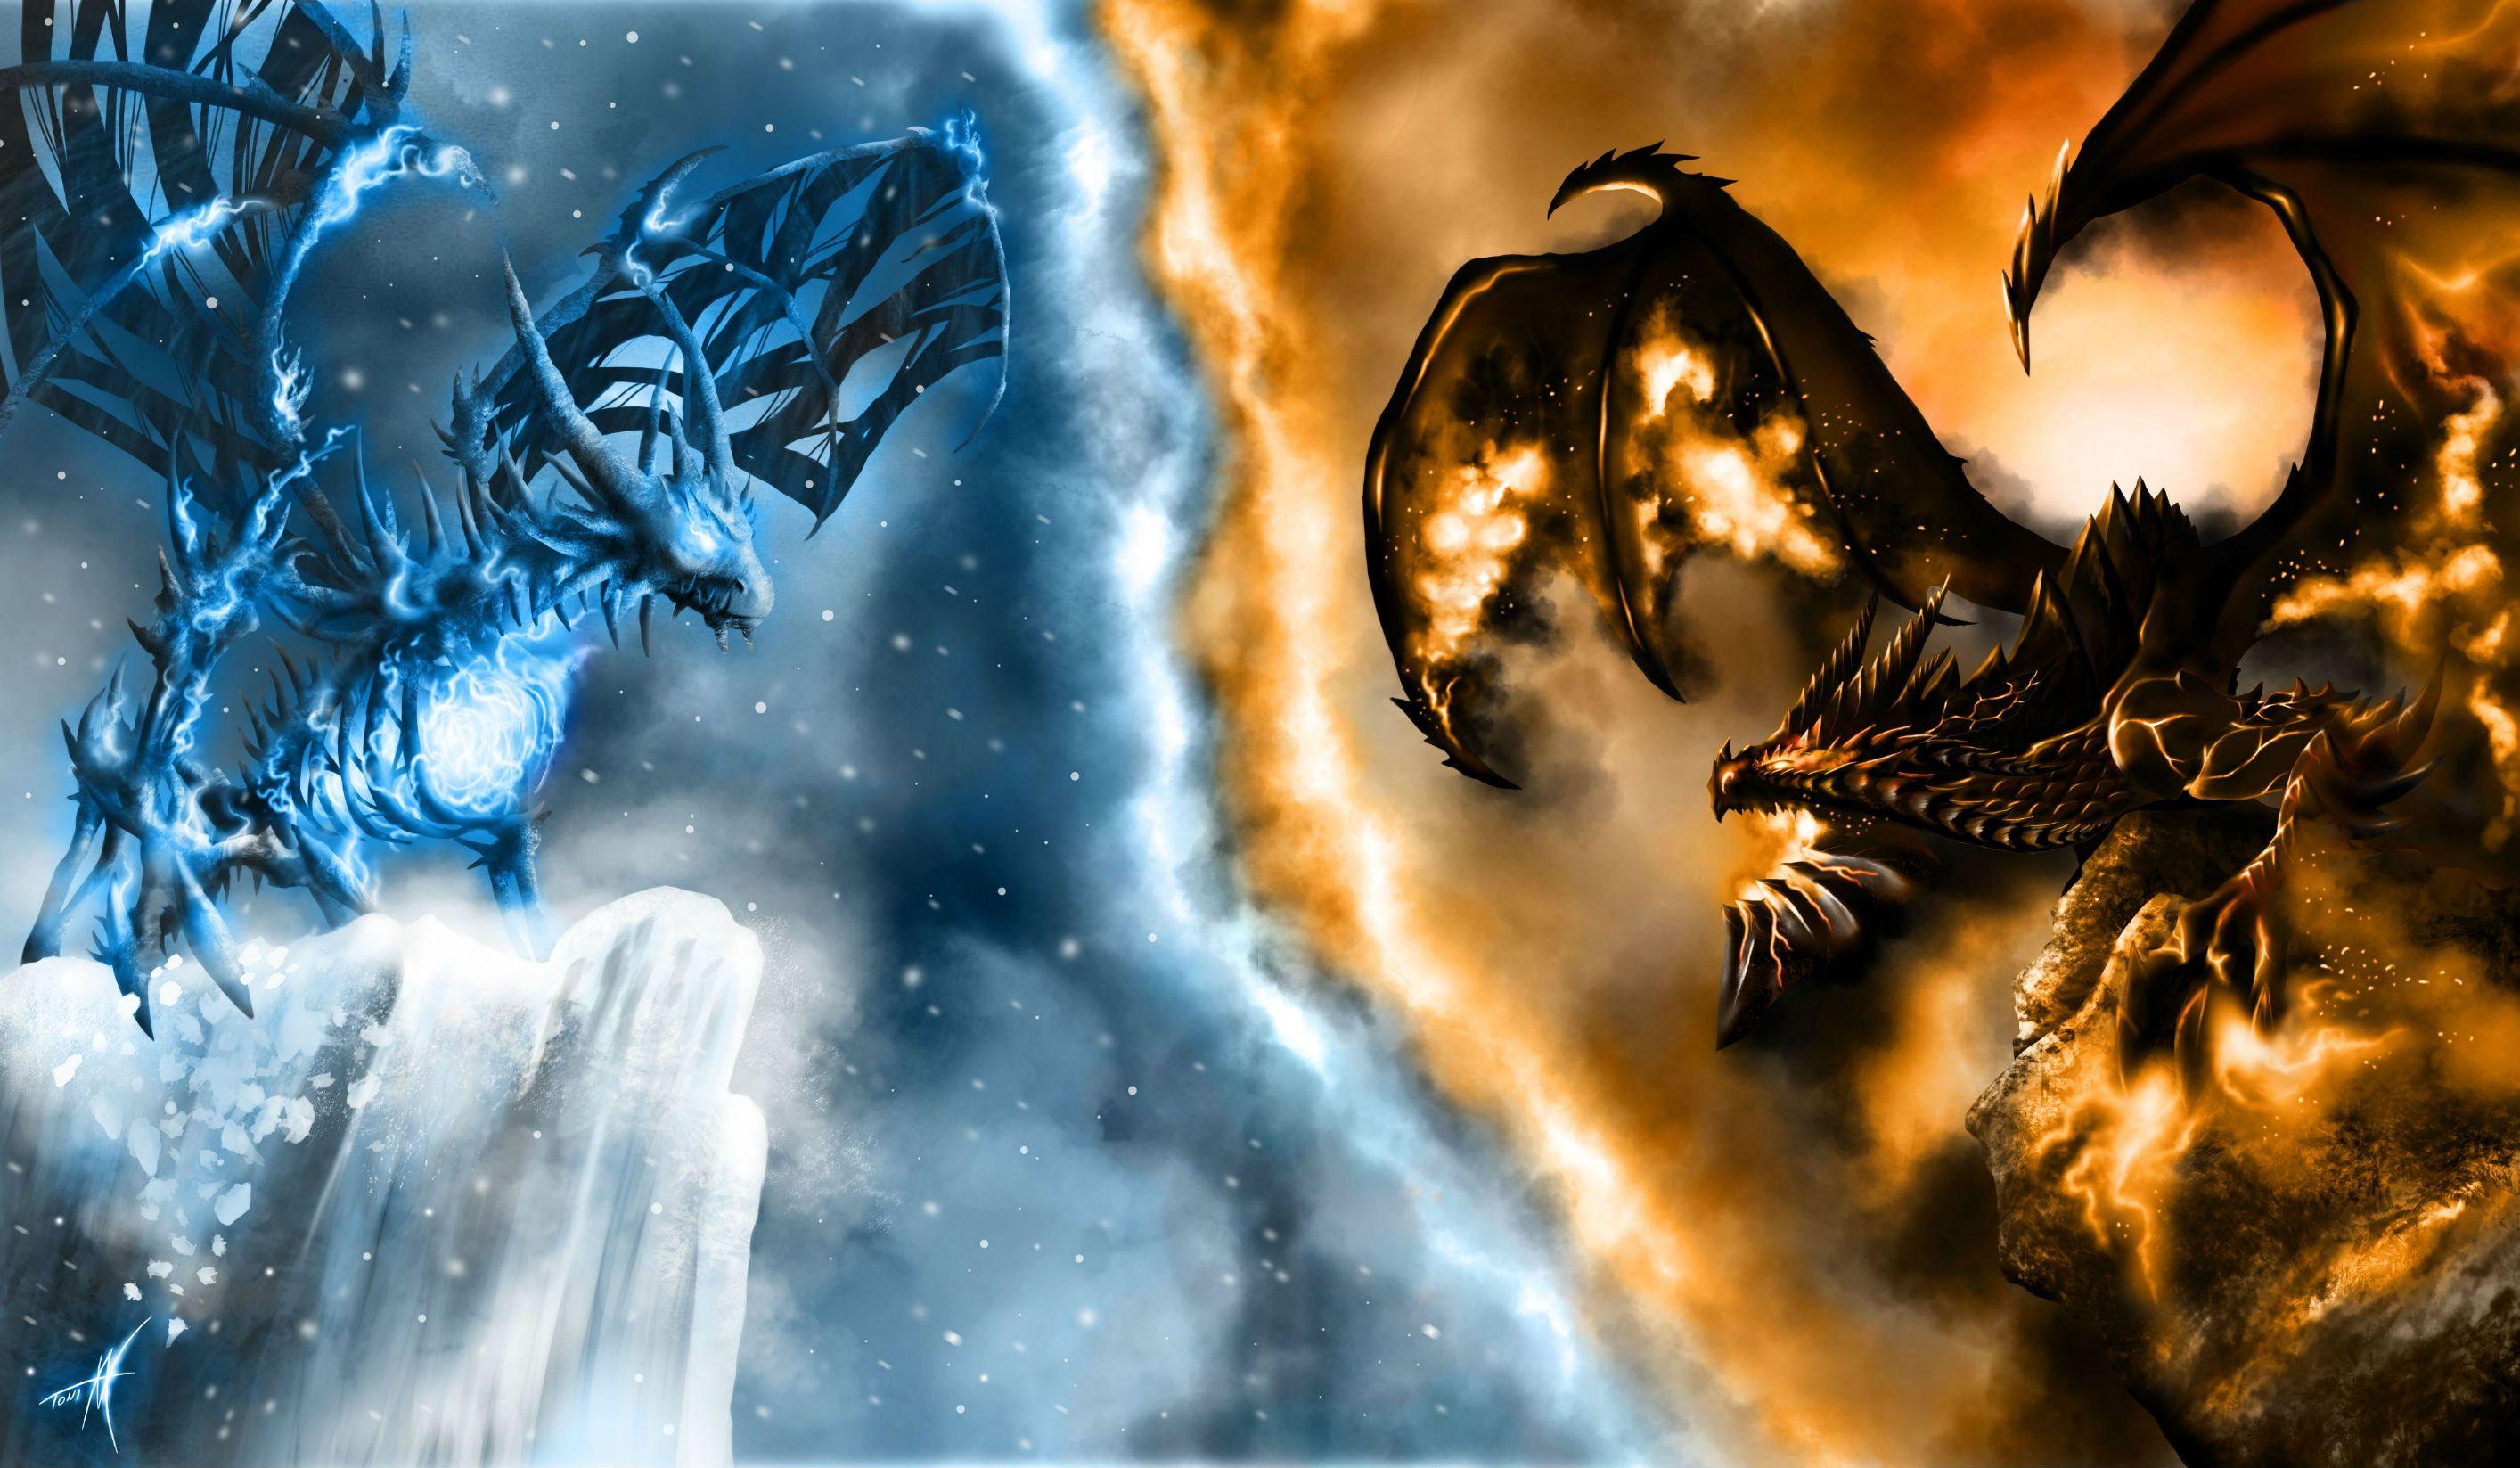 Fire Dragon vs Ice Dragon. ice dragon vs fire dragon, ice dragon, fire dragon. Ice dragon, Fire and ice dragons, Fire dragon